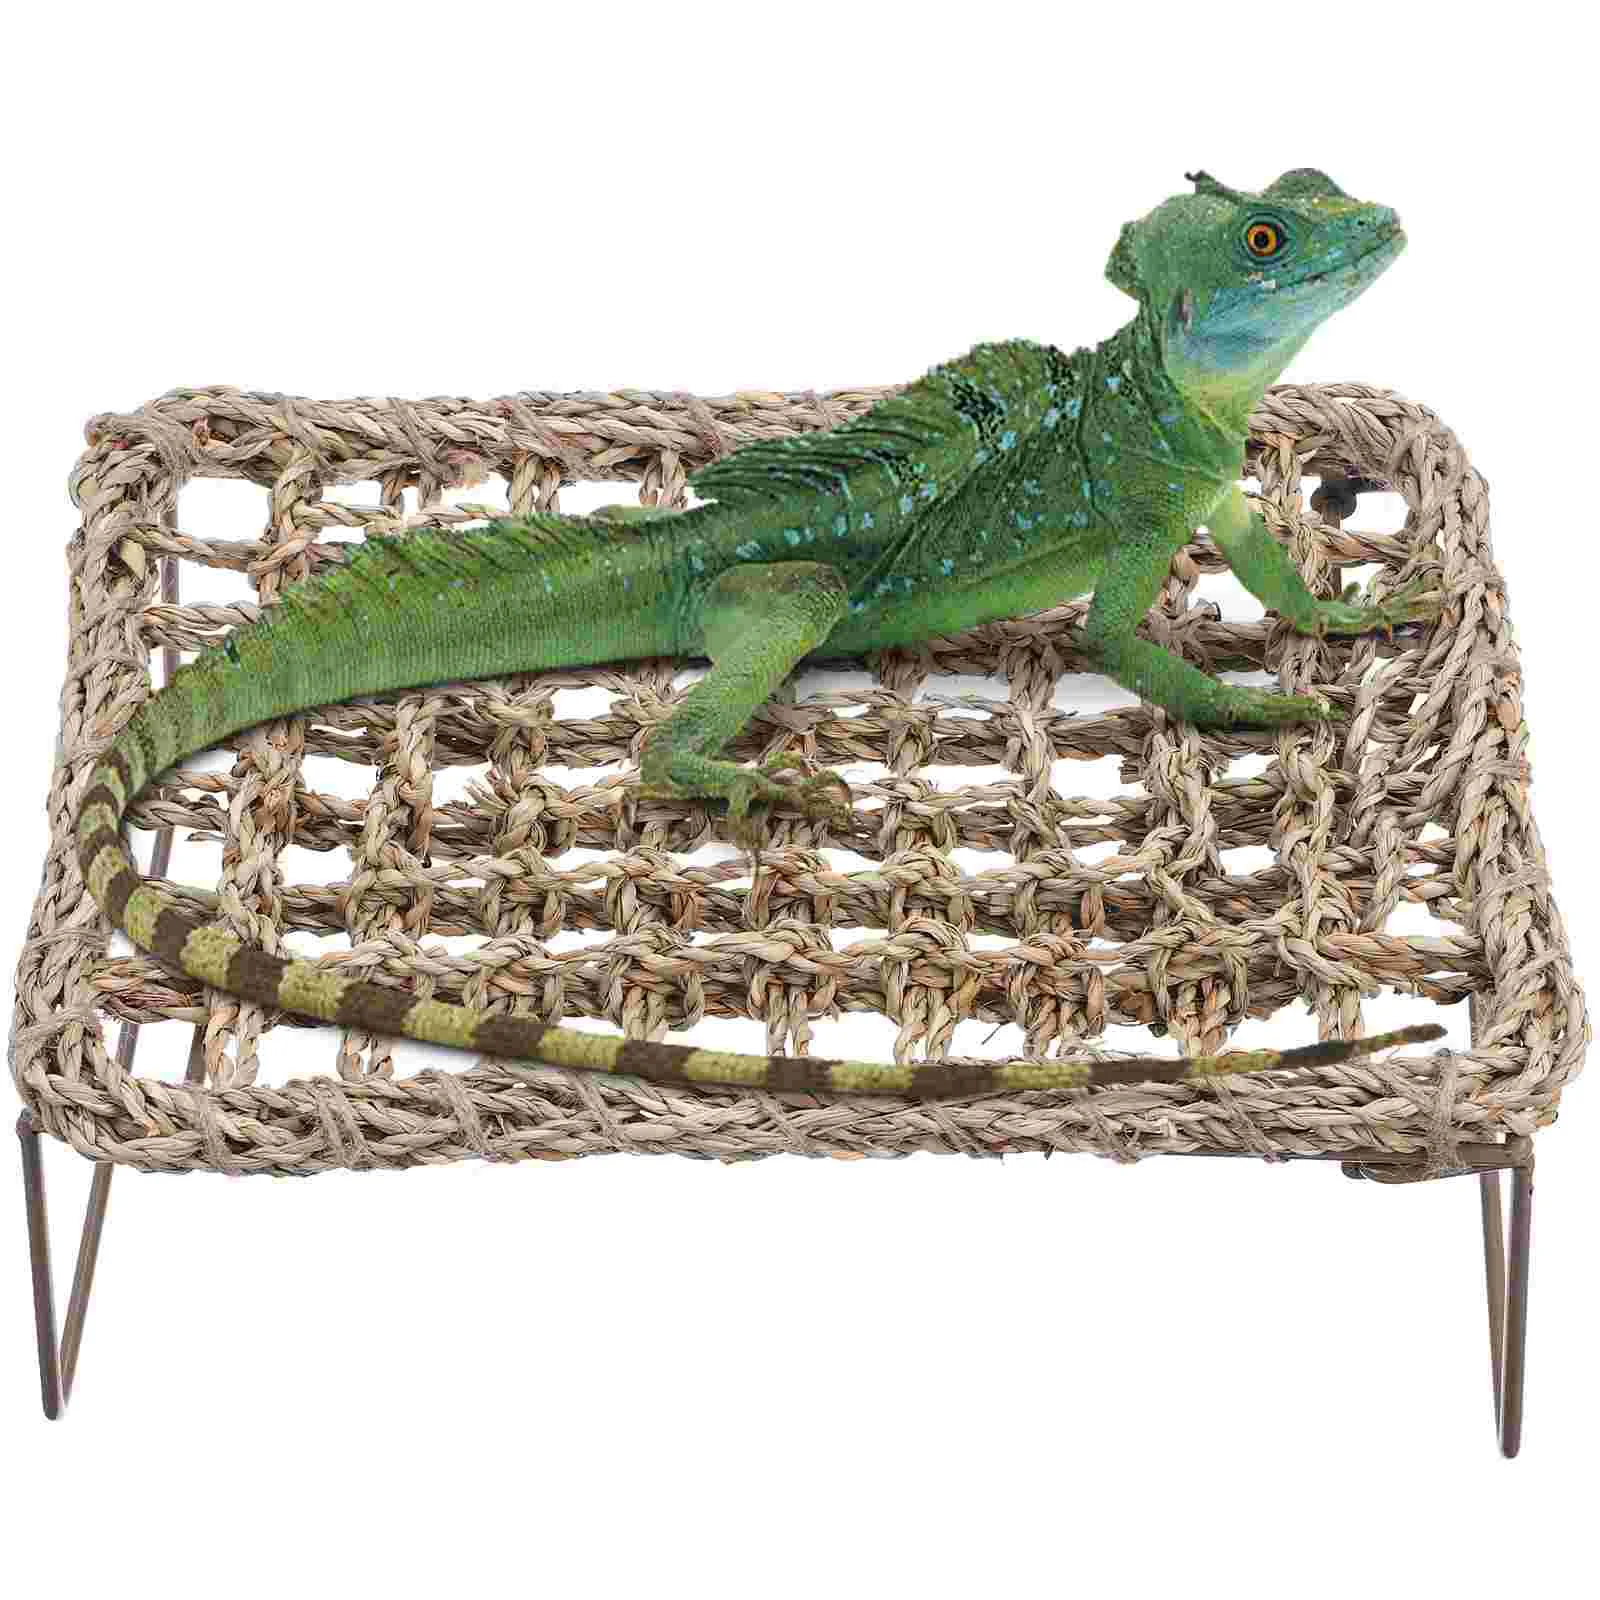 

2 Pcs Recliner Lizard Grass Mat Reptile Hammock Swing Pet Bed Animal Hideout Bridge Crawling Cushion Hanging Bearded Dragon